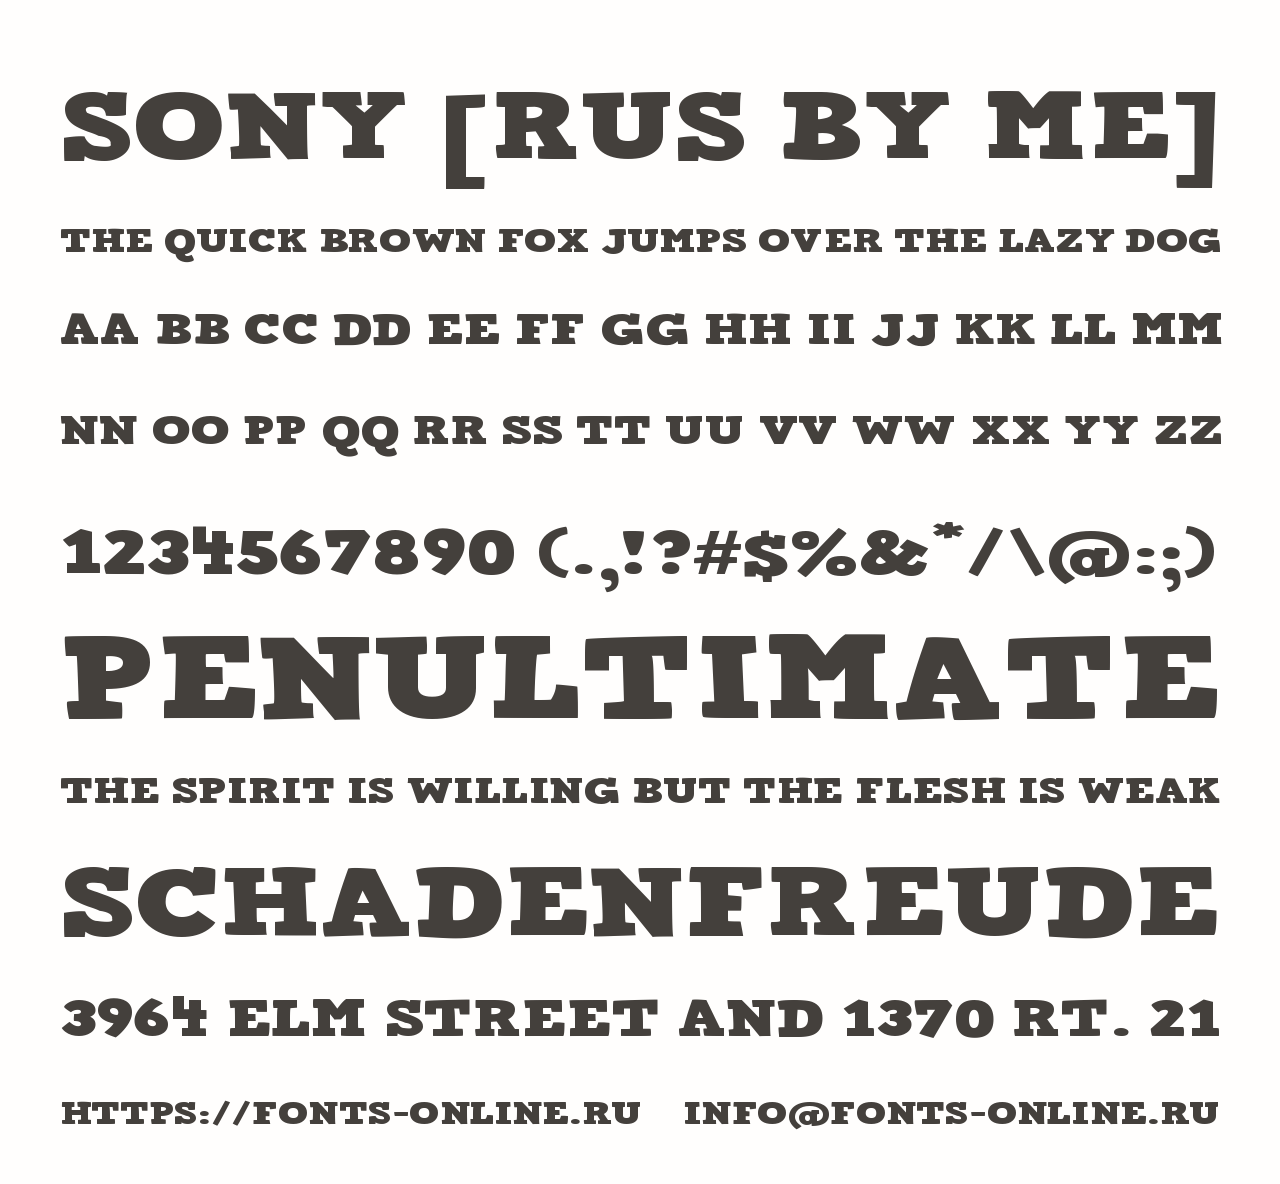 Шрифт Sony [Rus by me]